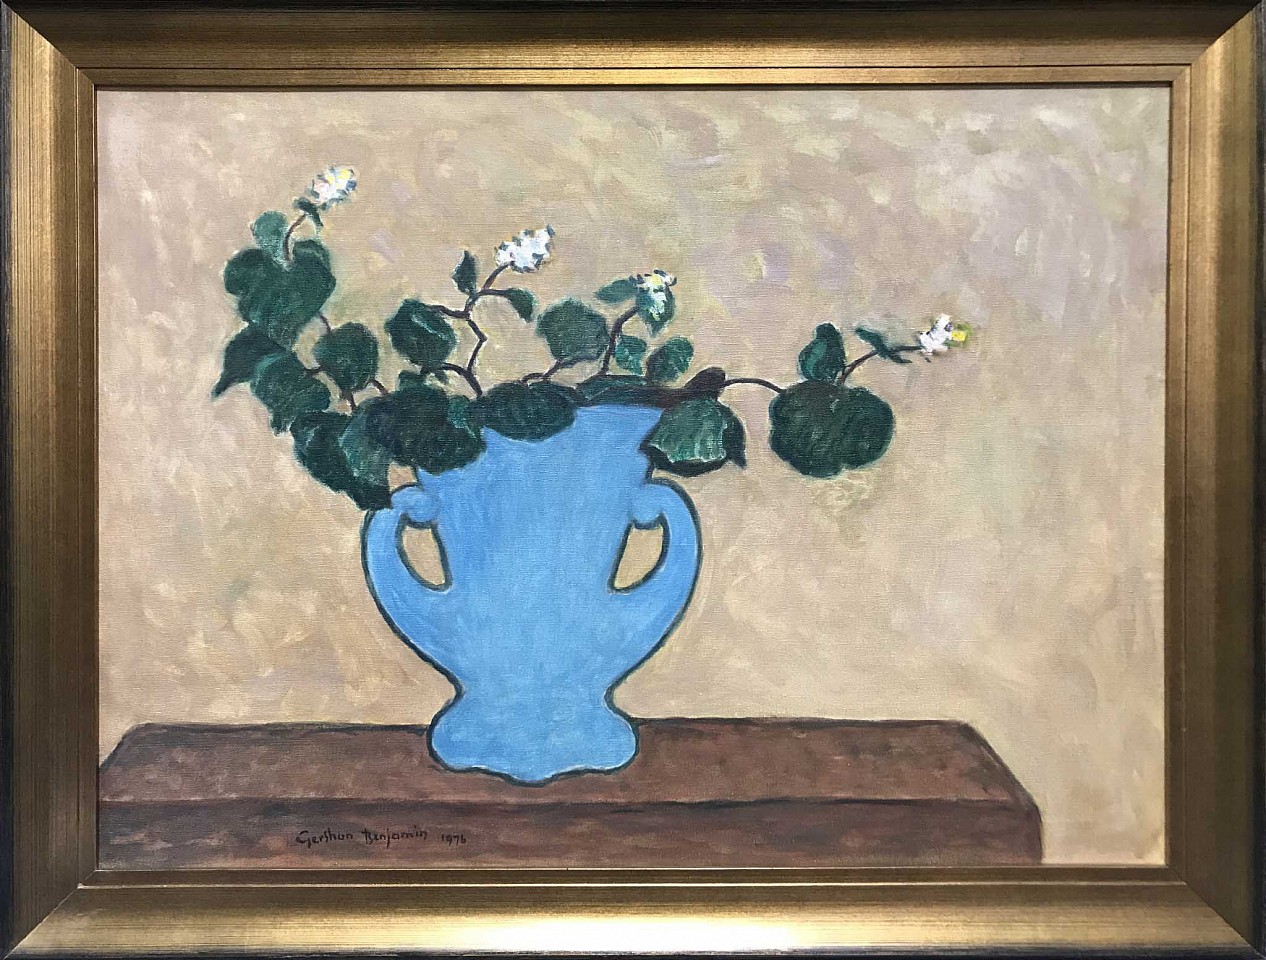 Gershon Benjamin, Begonias in a Blue Pot, 1976
oil on canvas, 25 x 33 in. (63.5 x 83.8 cm)
GB1803009